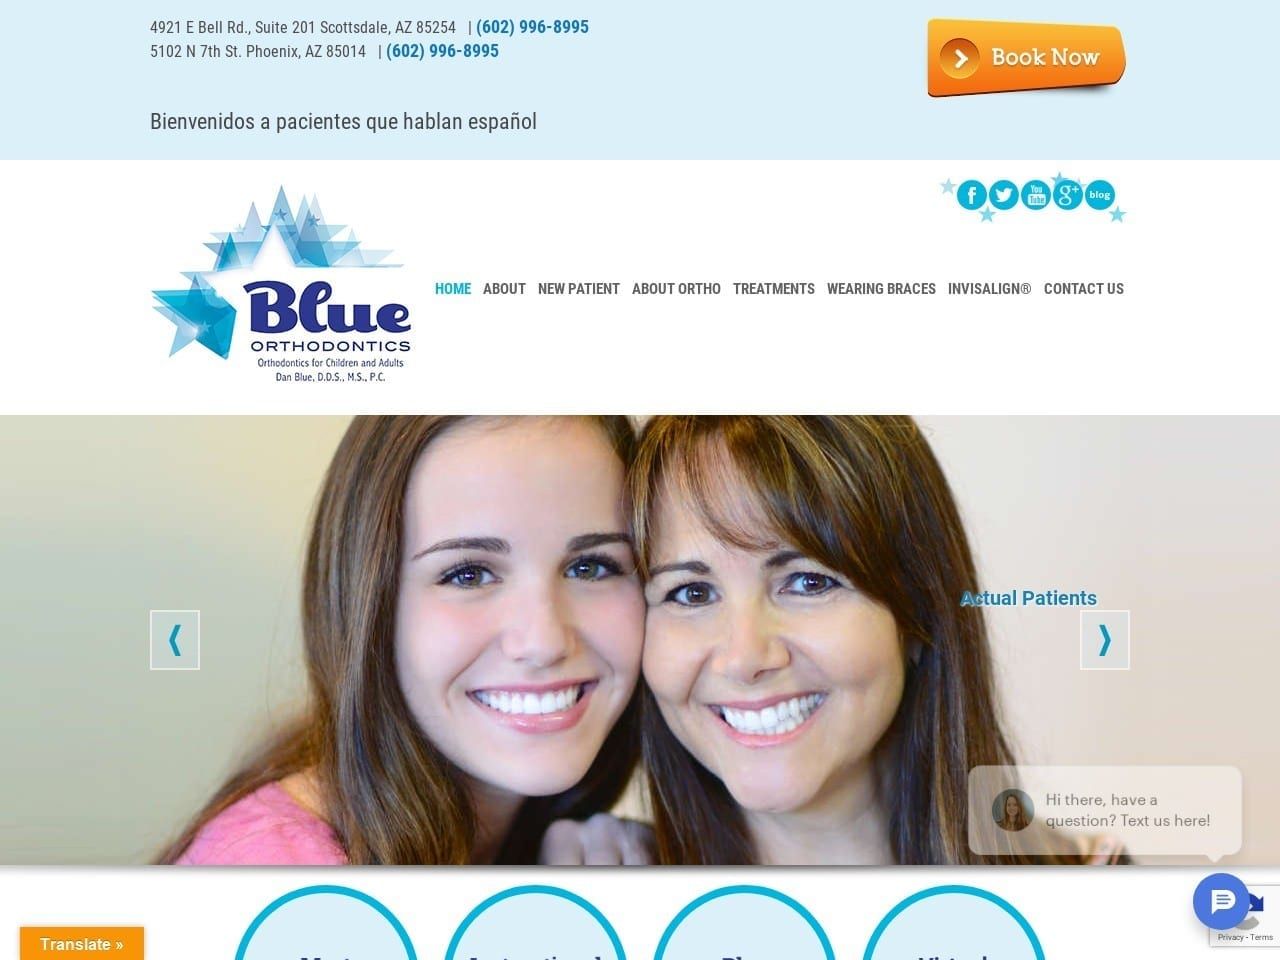 Blue Orthodontics Website Screenshot from blueorthodontics.com